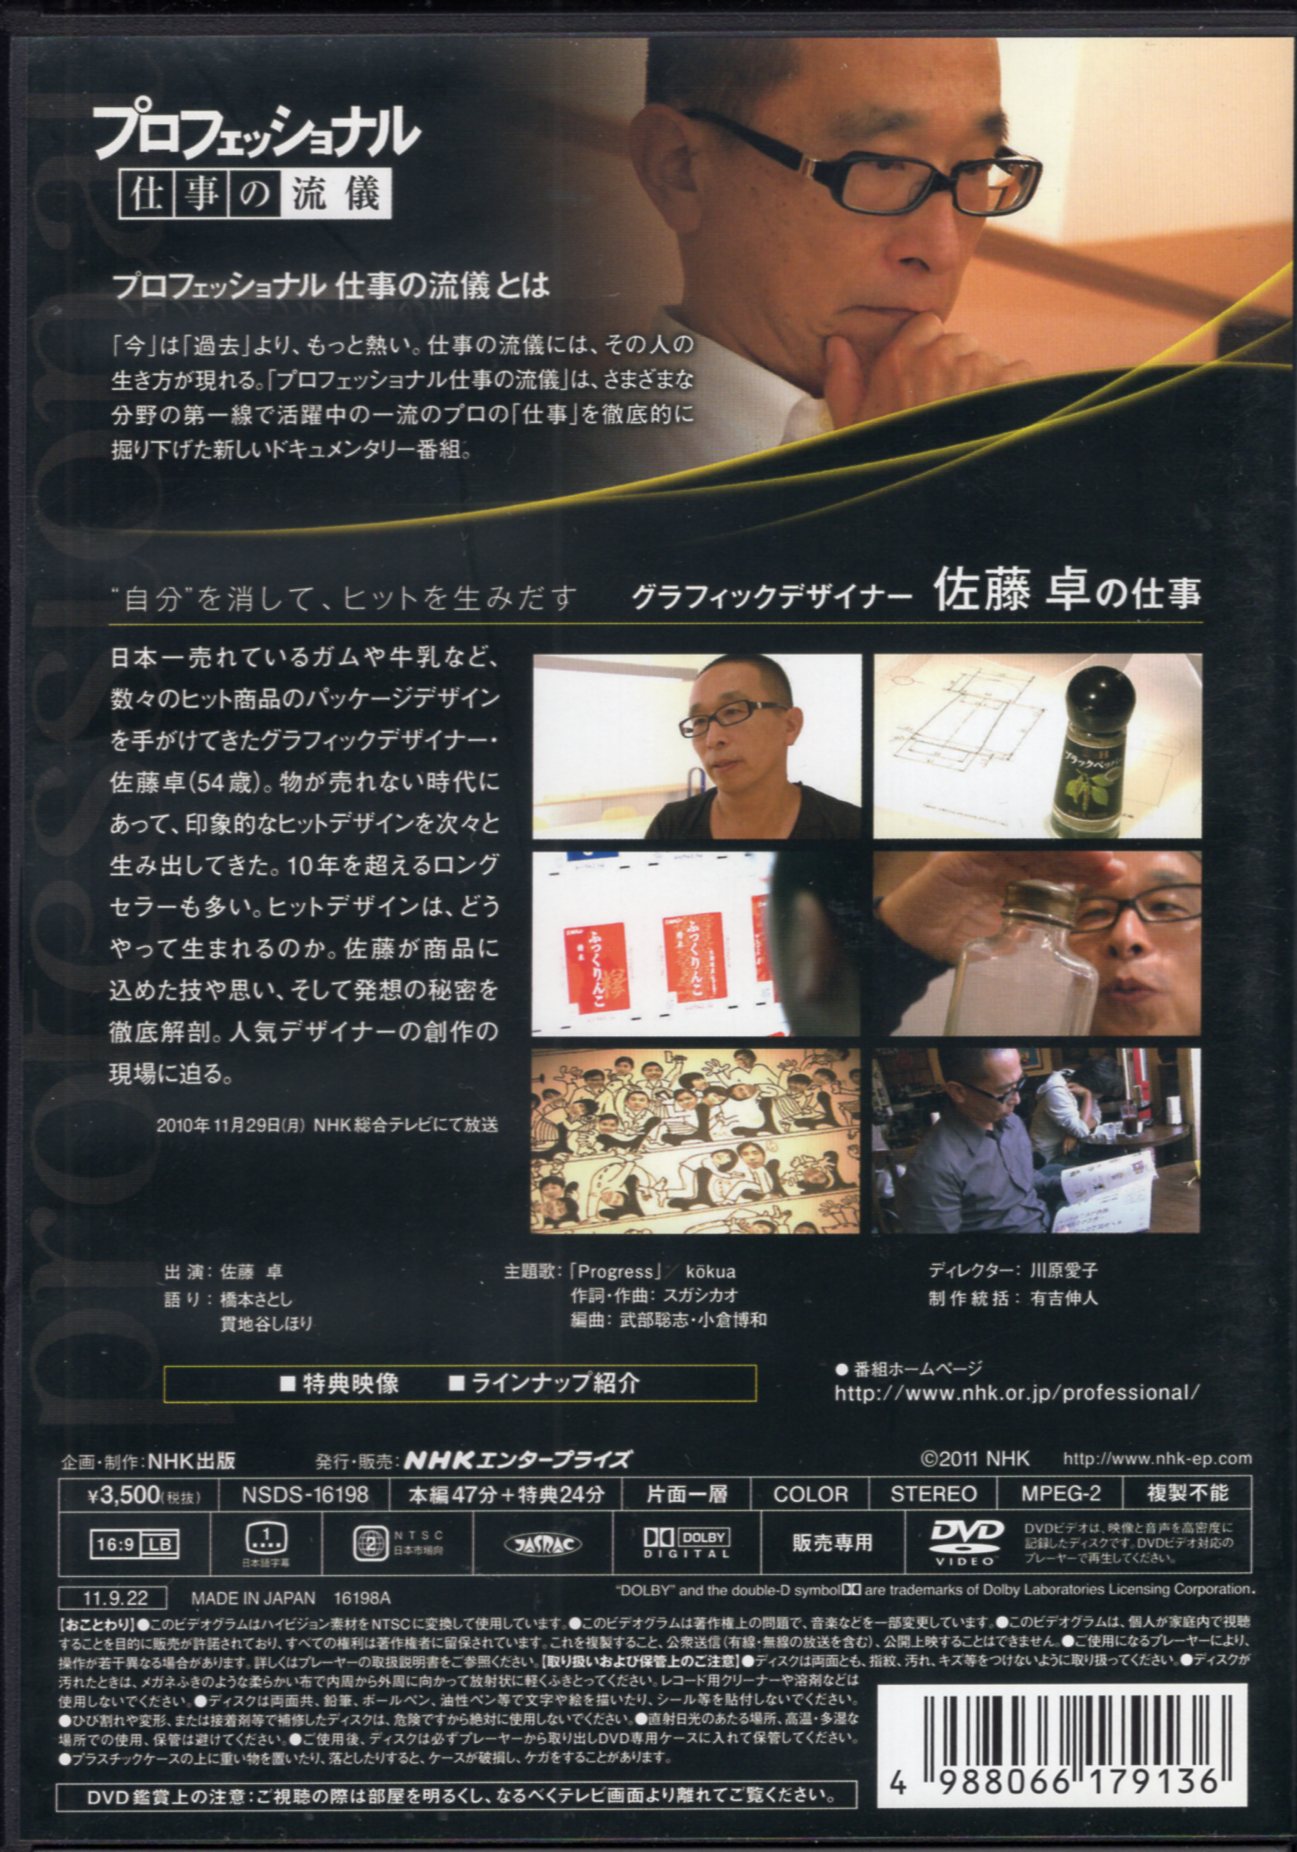 DVD NHK「プロフェッショナル 仕事の流儀 デザイナー 佐藤オオキ - DVD/ブルーレイ